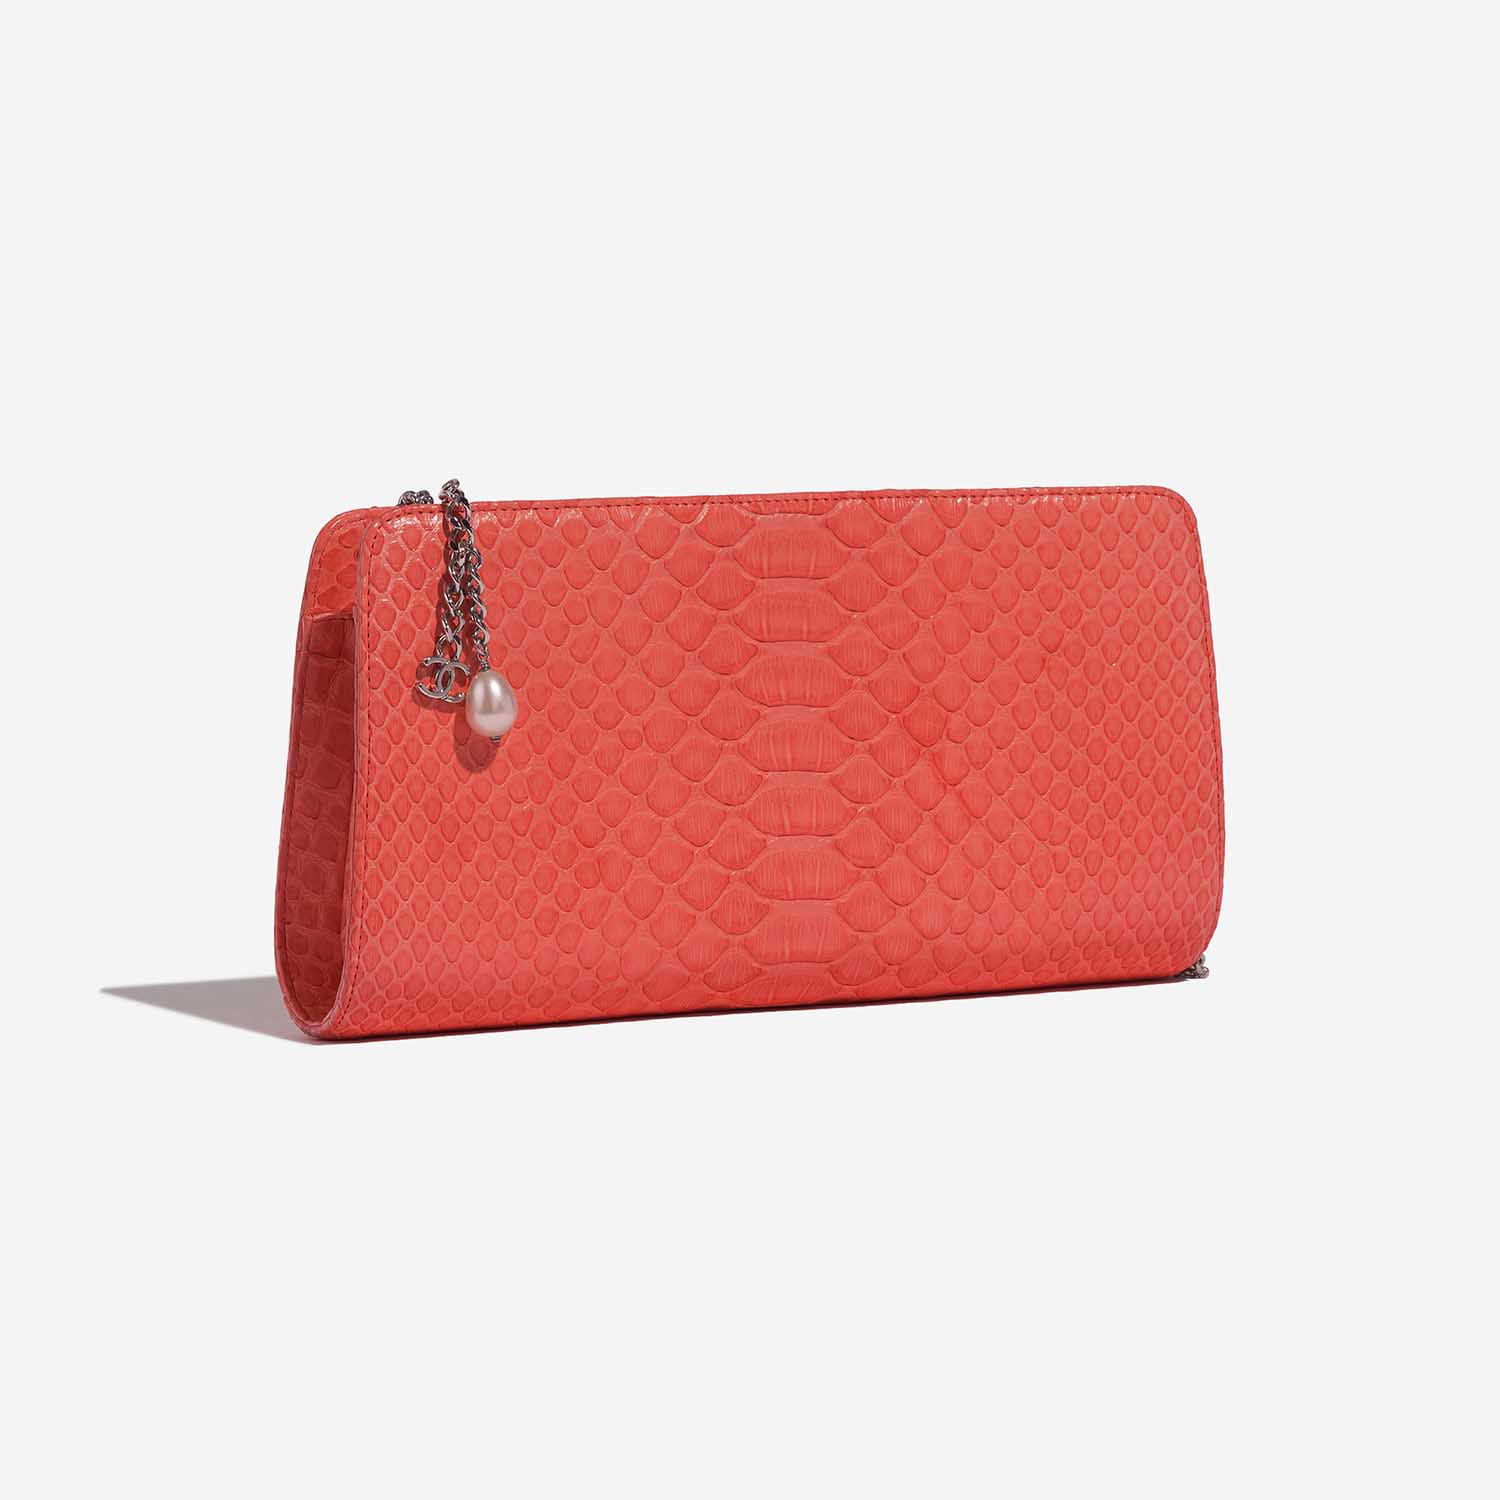 Pre-owned Chanel bag Clutch Python Coral Orange, Red Side Front | Sell your designer bag on Saclab.com